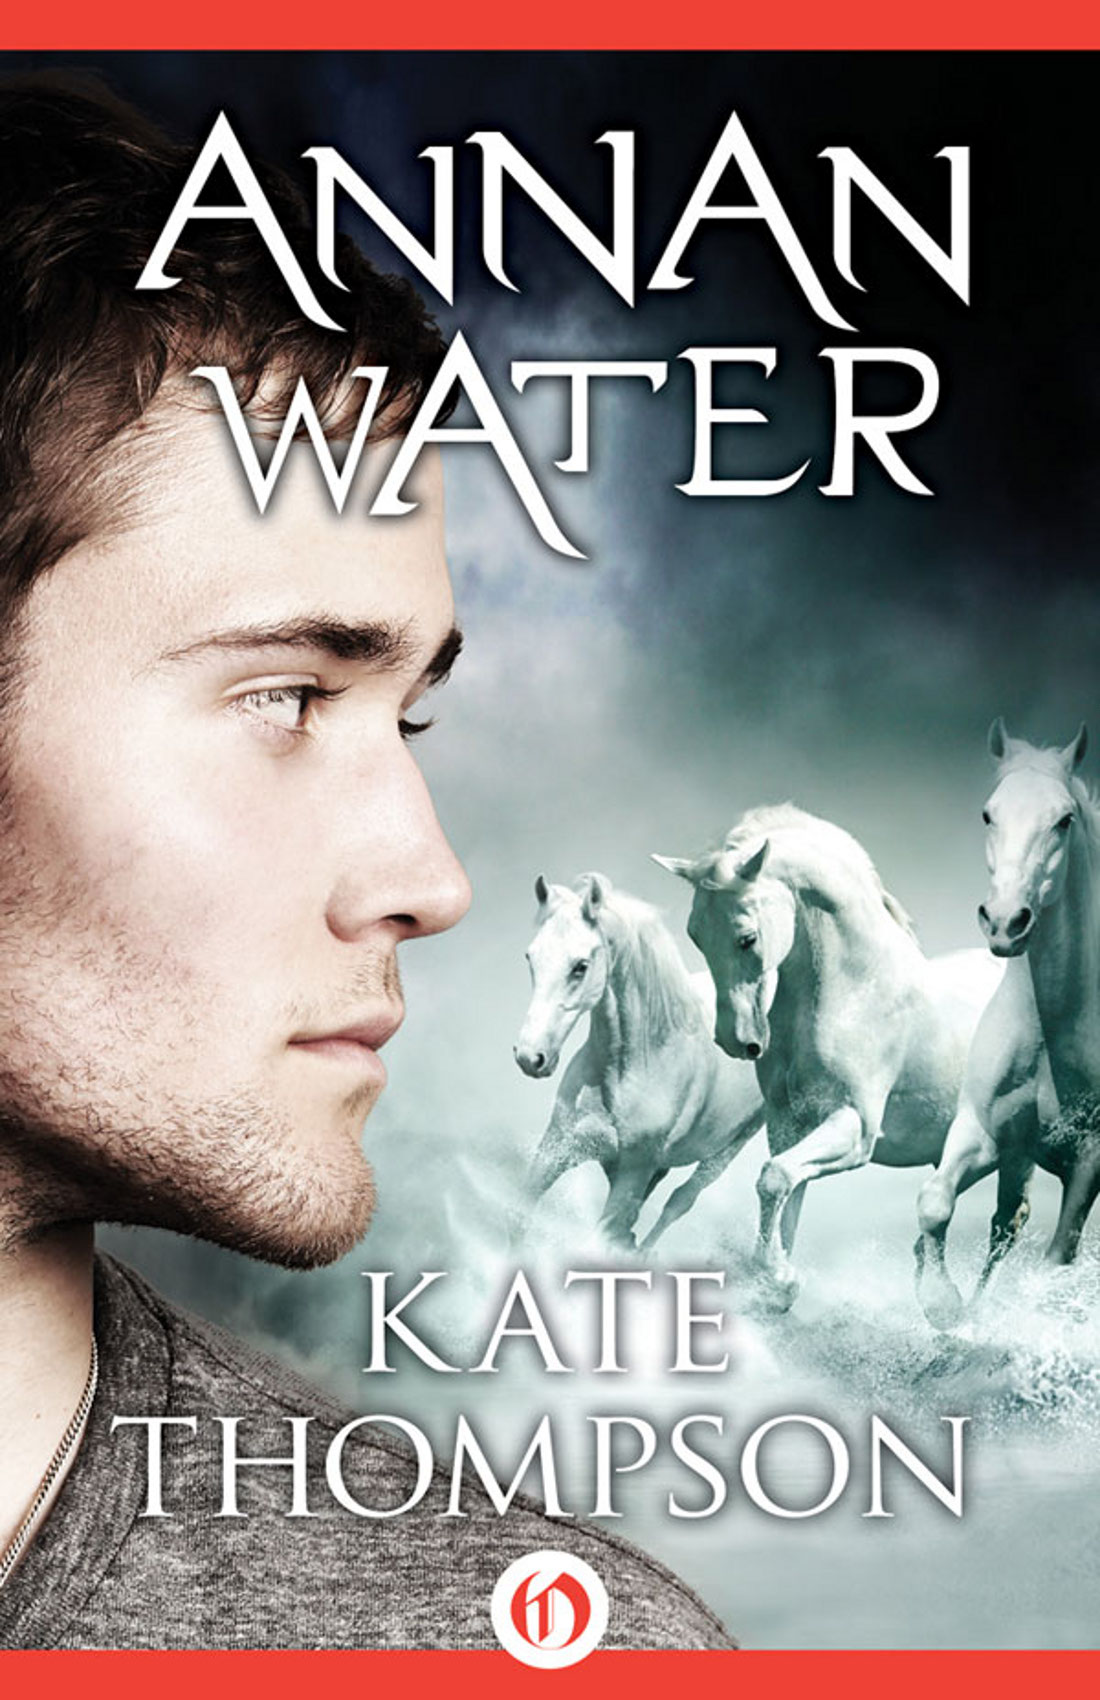 Annan Water by Kate Thompson